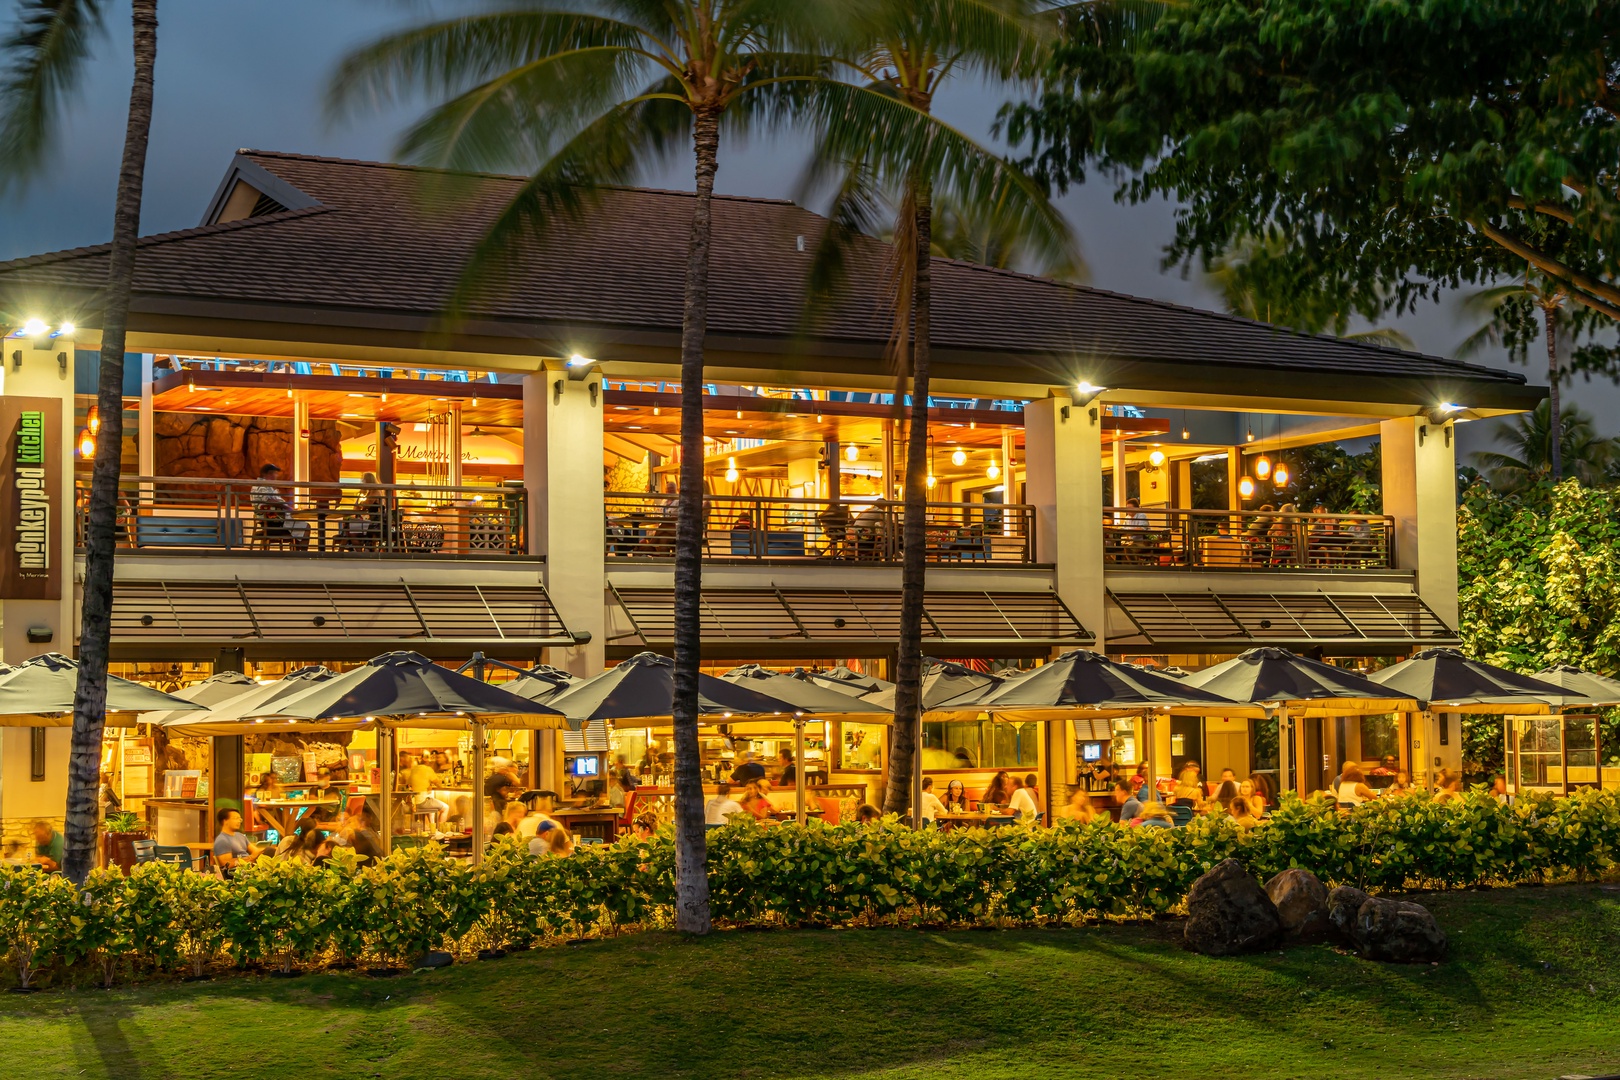 Kapolei Vacation Rentals, Kai Lani 21C - Enjoy shopping and dining on the island.